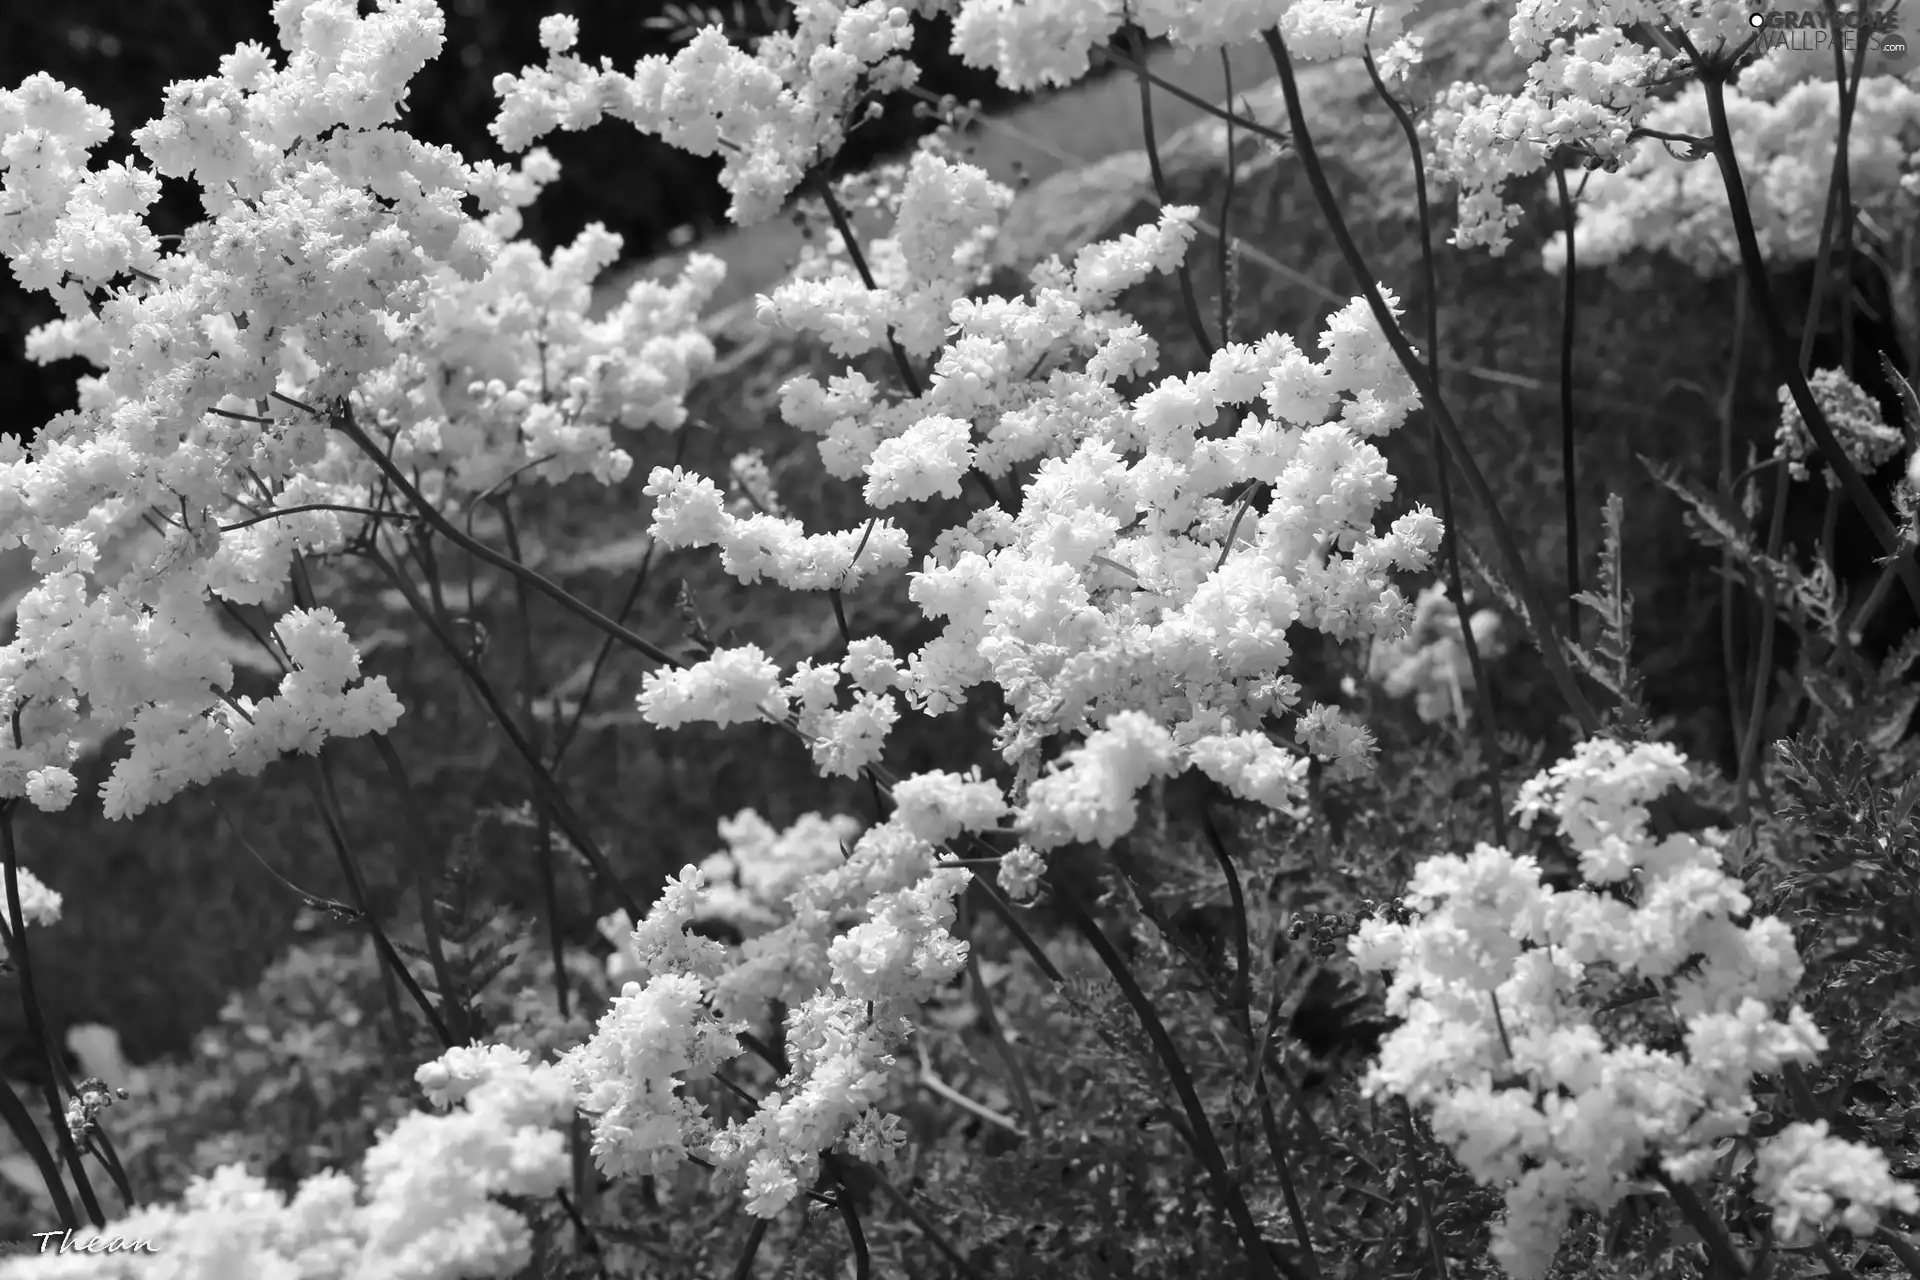 Flowers, Bush, White